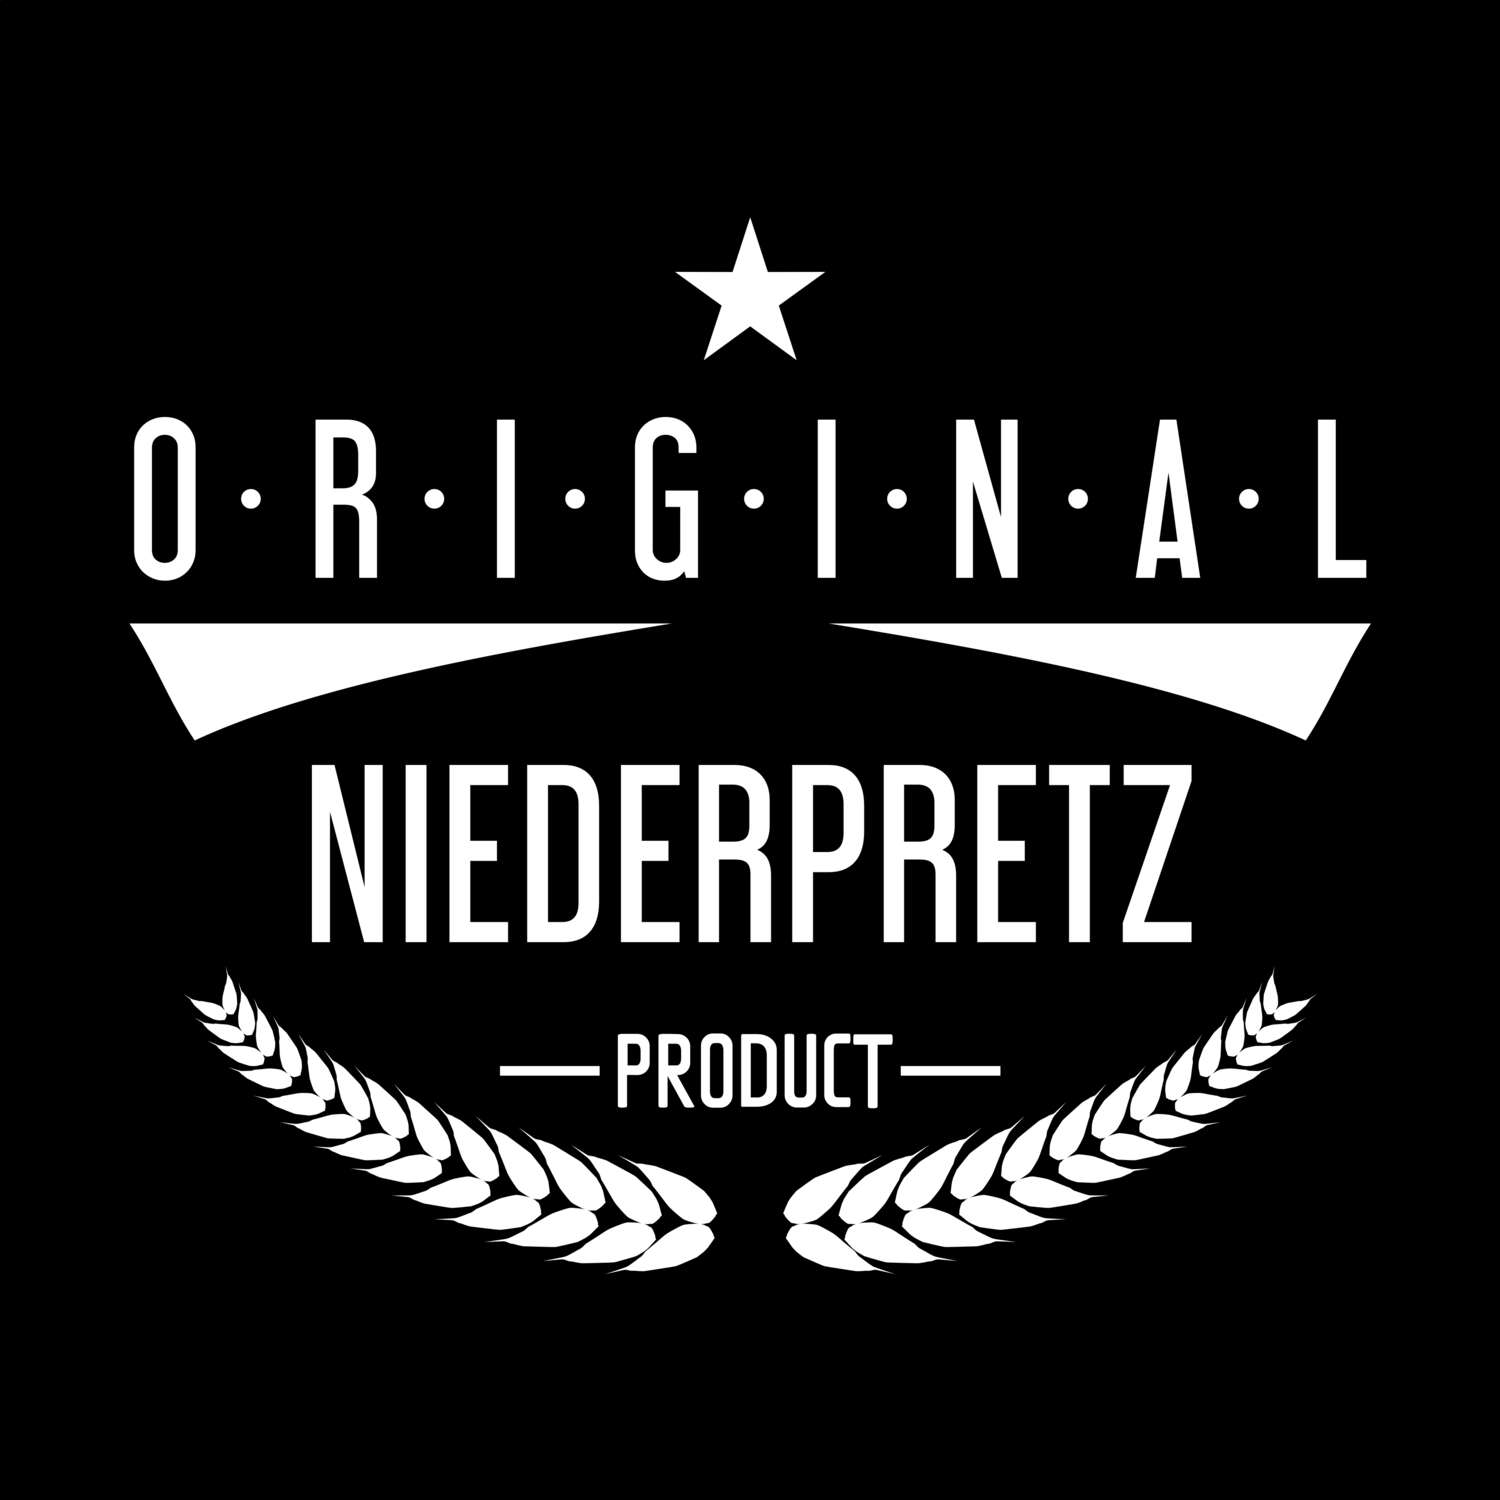 Niederpretz T-Shirt »Original Product«